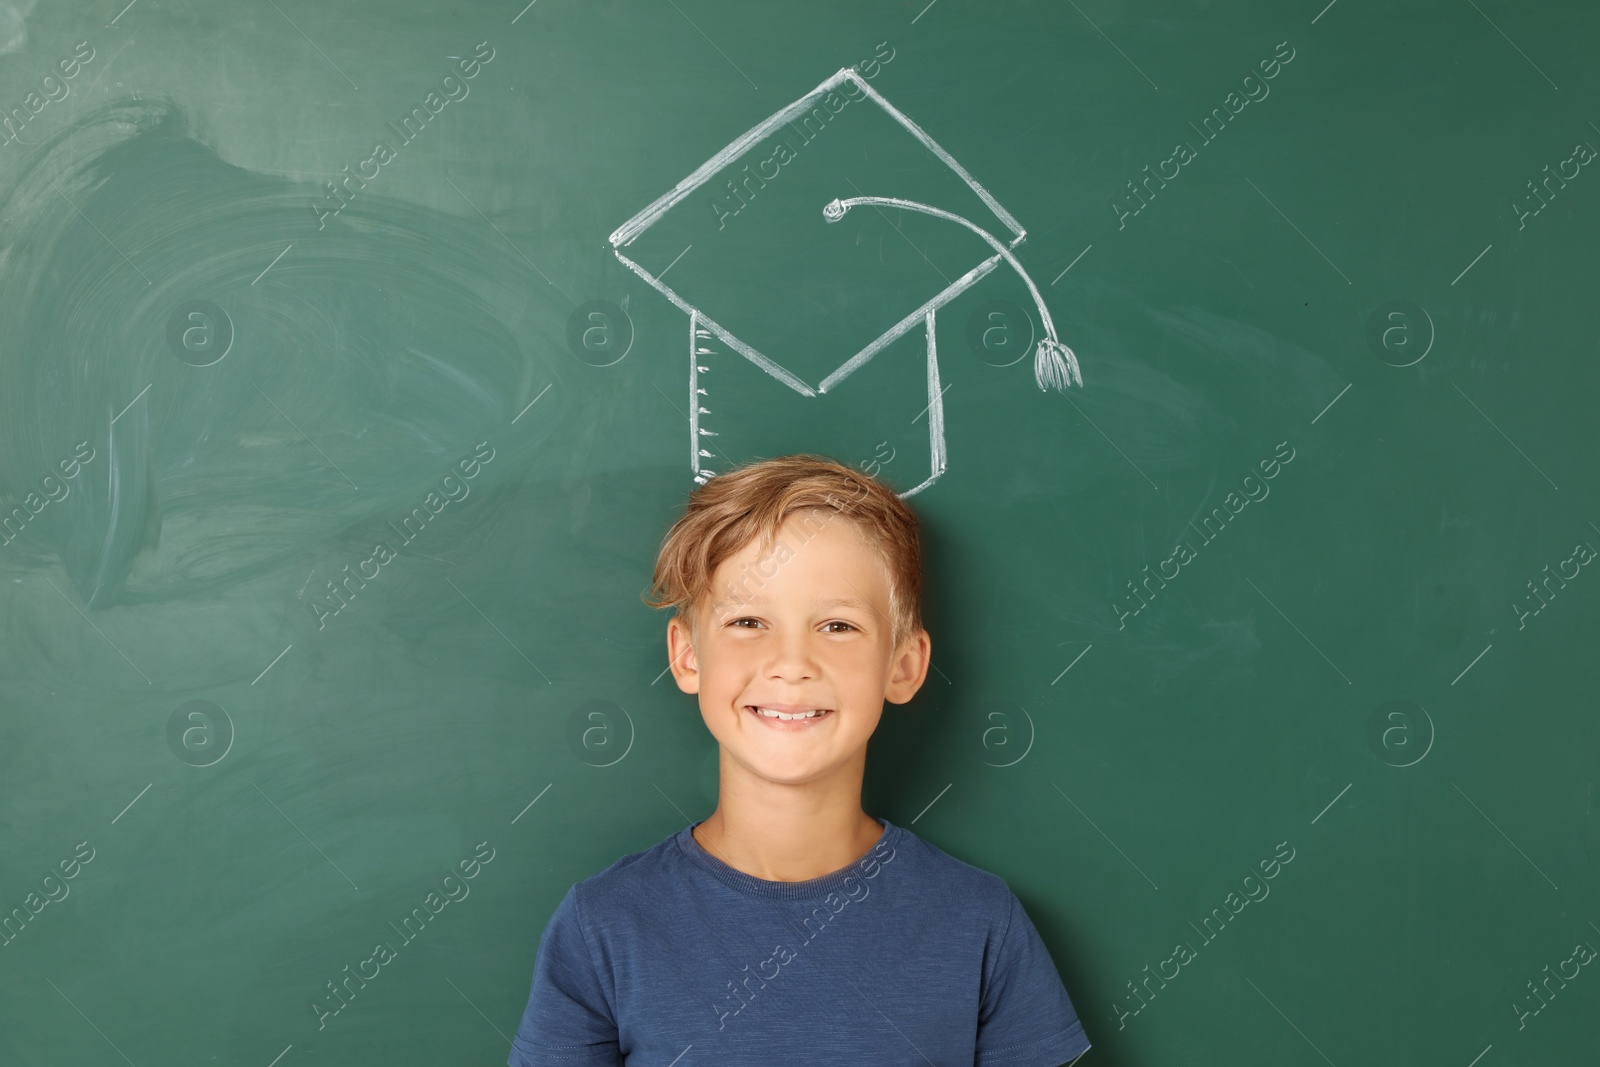 Photo of Little school child near chalkboard with drawing of graduate cap